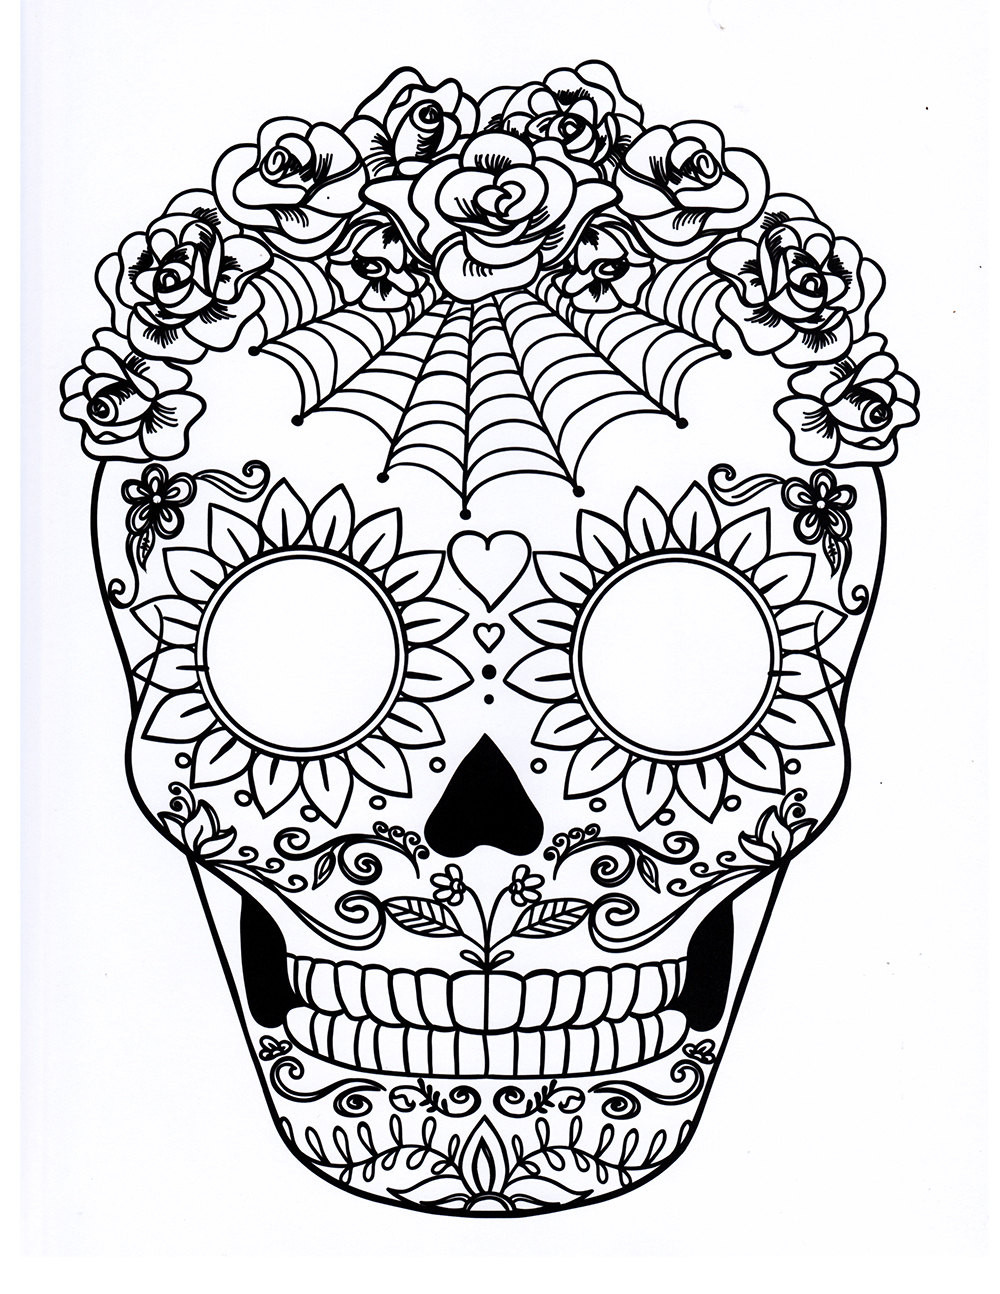 Printable Sugar Skull Coloring Pages
 Five different sugar skull coloring pages printable